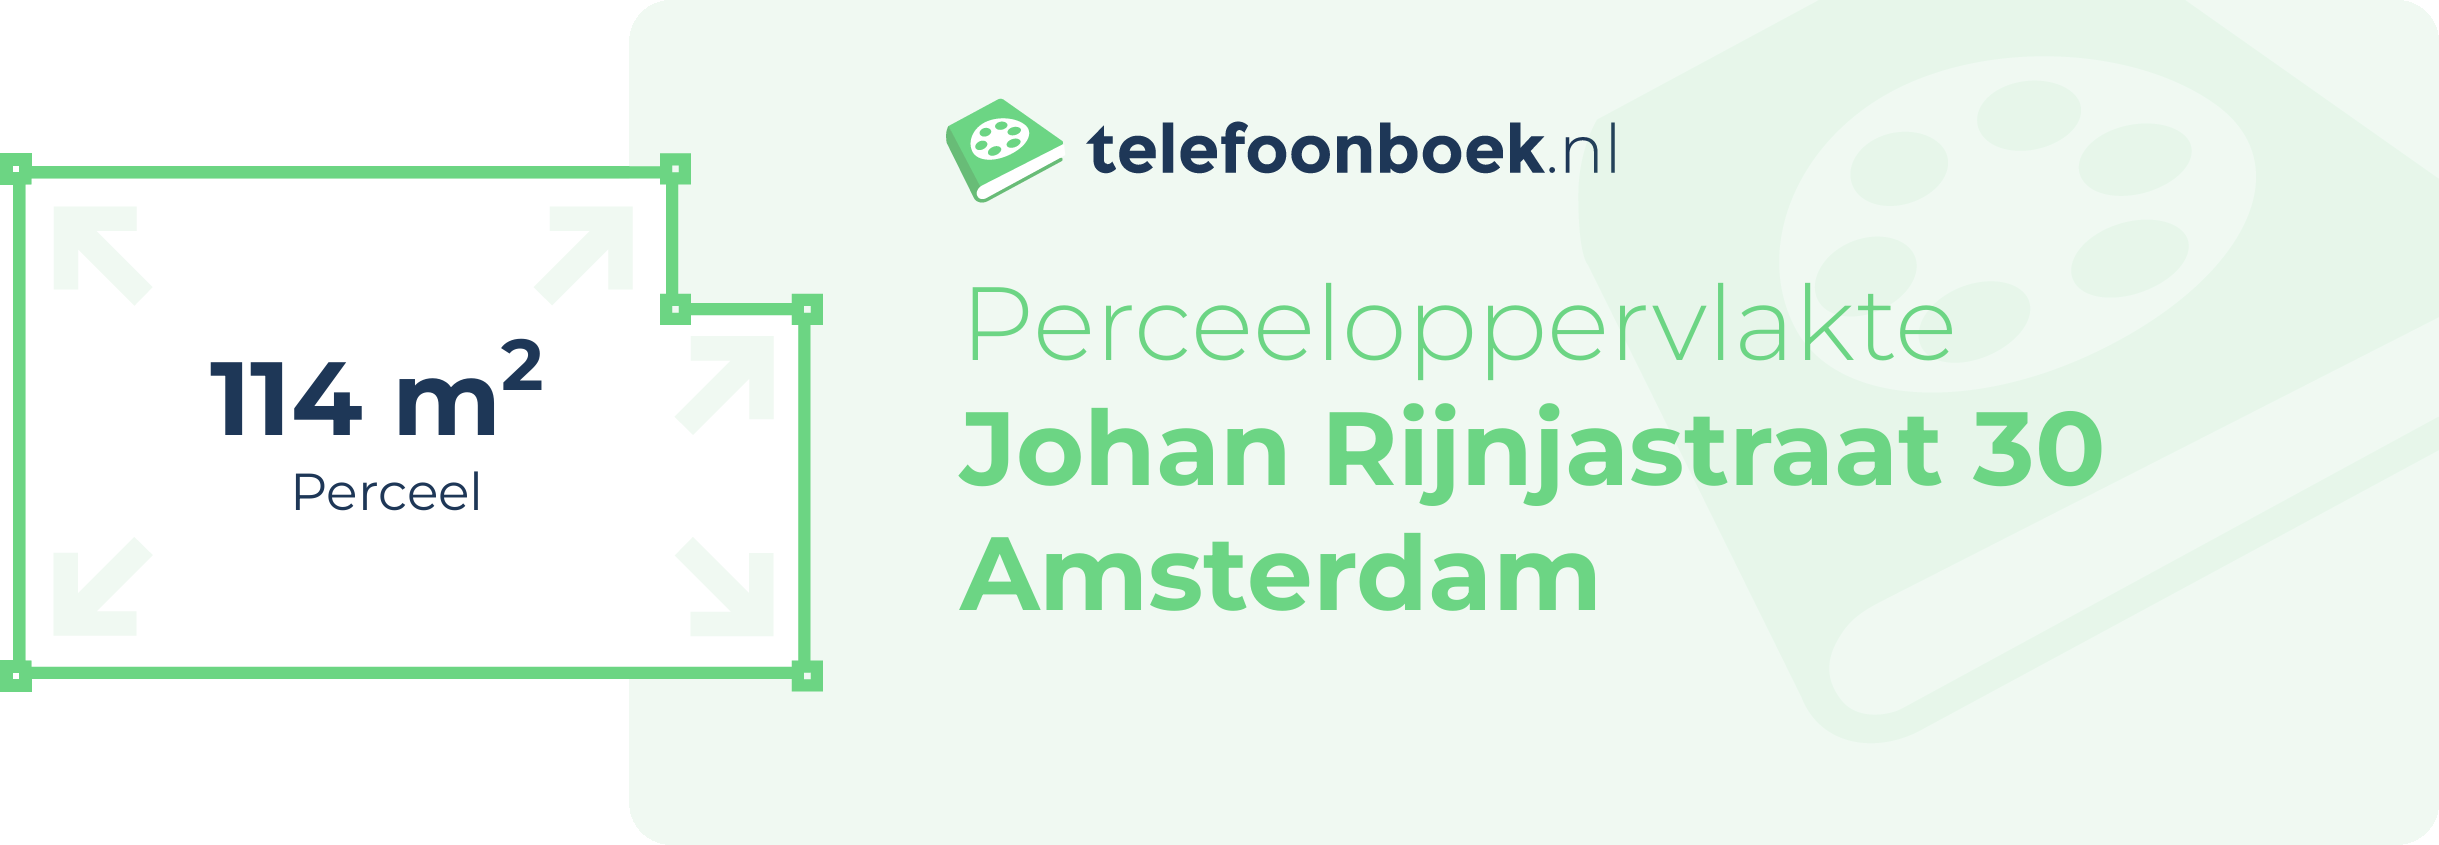 Perceeloppervlakte Johan Rijnjastraat 30 Amsterdam